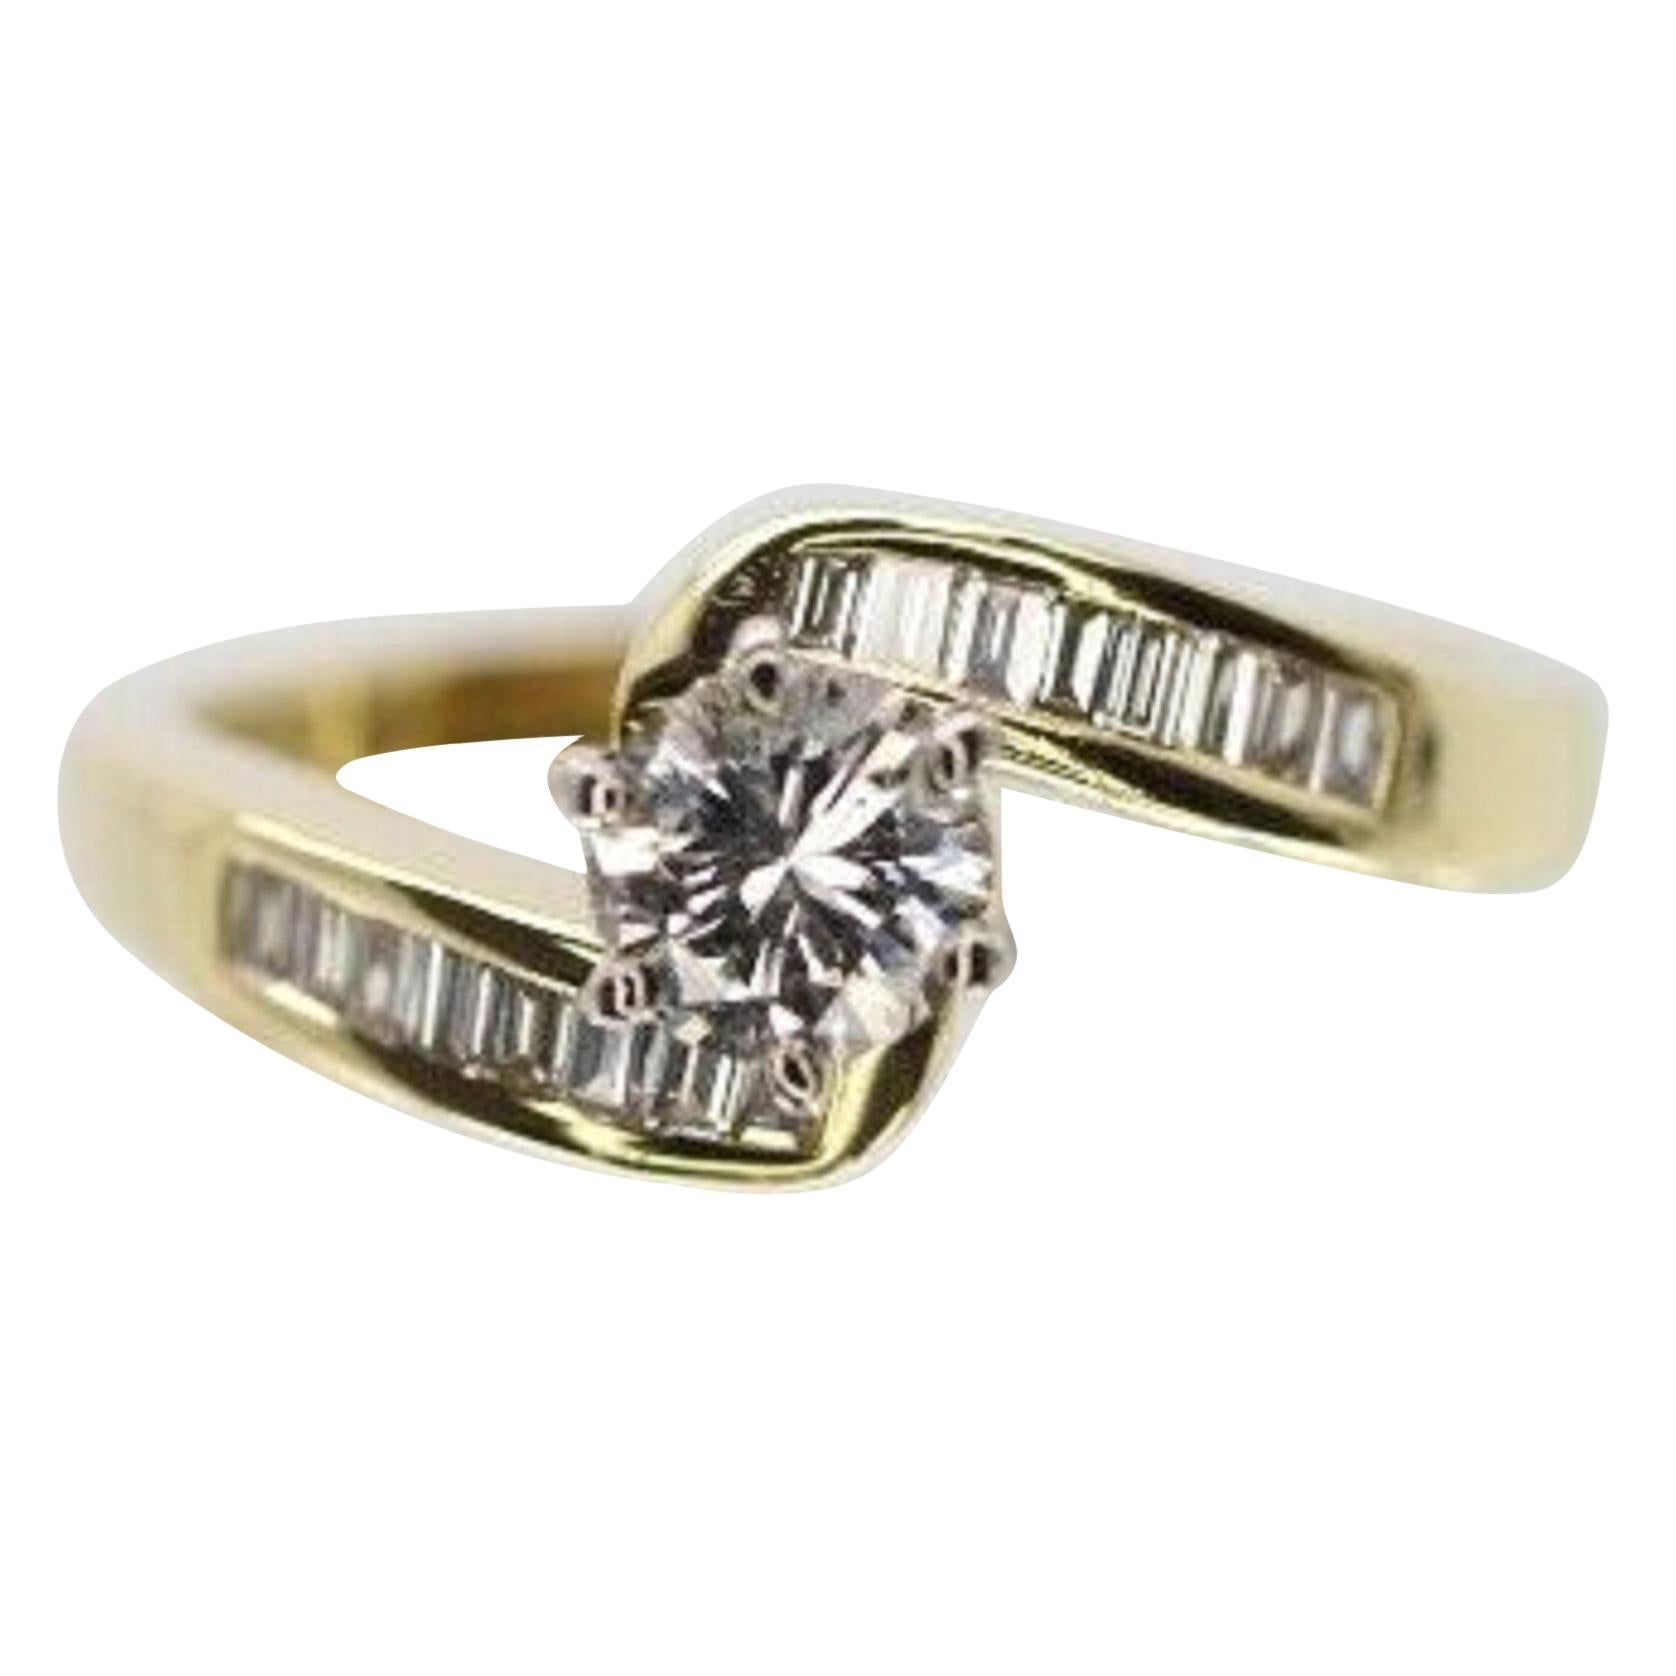 https://a.1stdibscdn.com/14-karat-yellow-gold-bypass-baguette-and-round-diamond-engagement-ring-for-sale/1121189/j_84239621577346170766/8423962_master.jpg